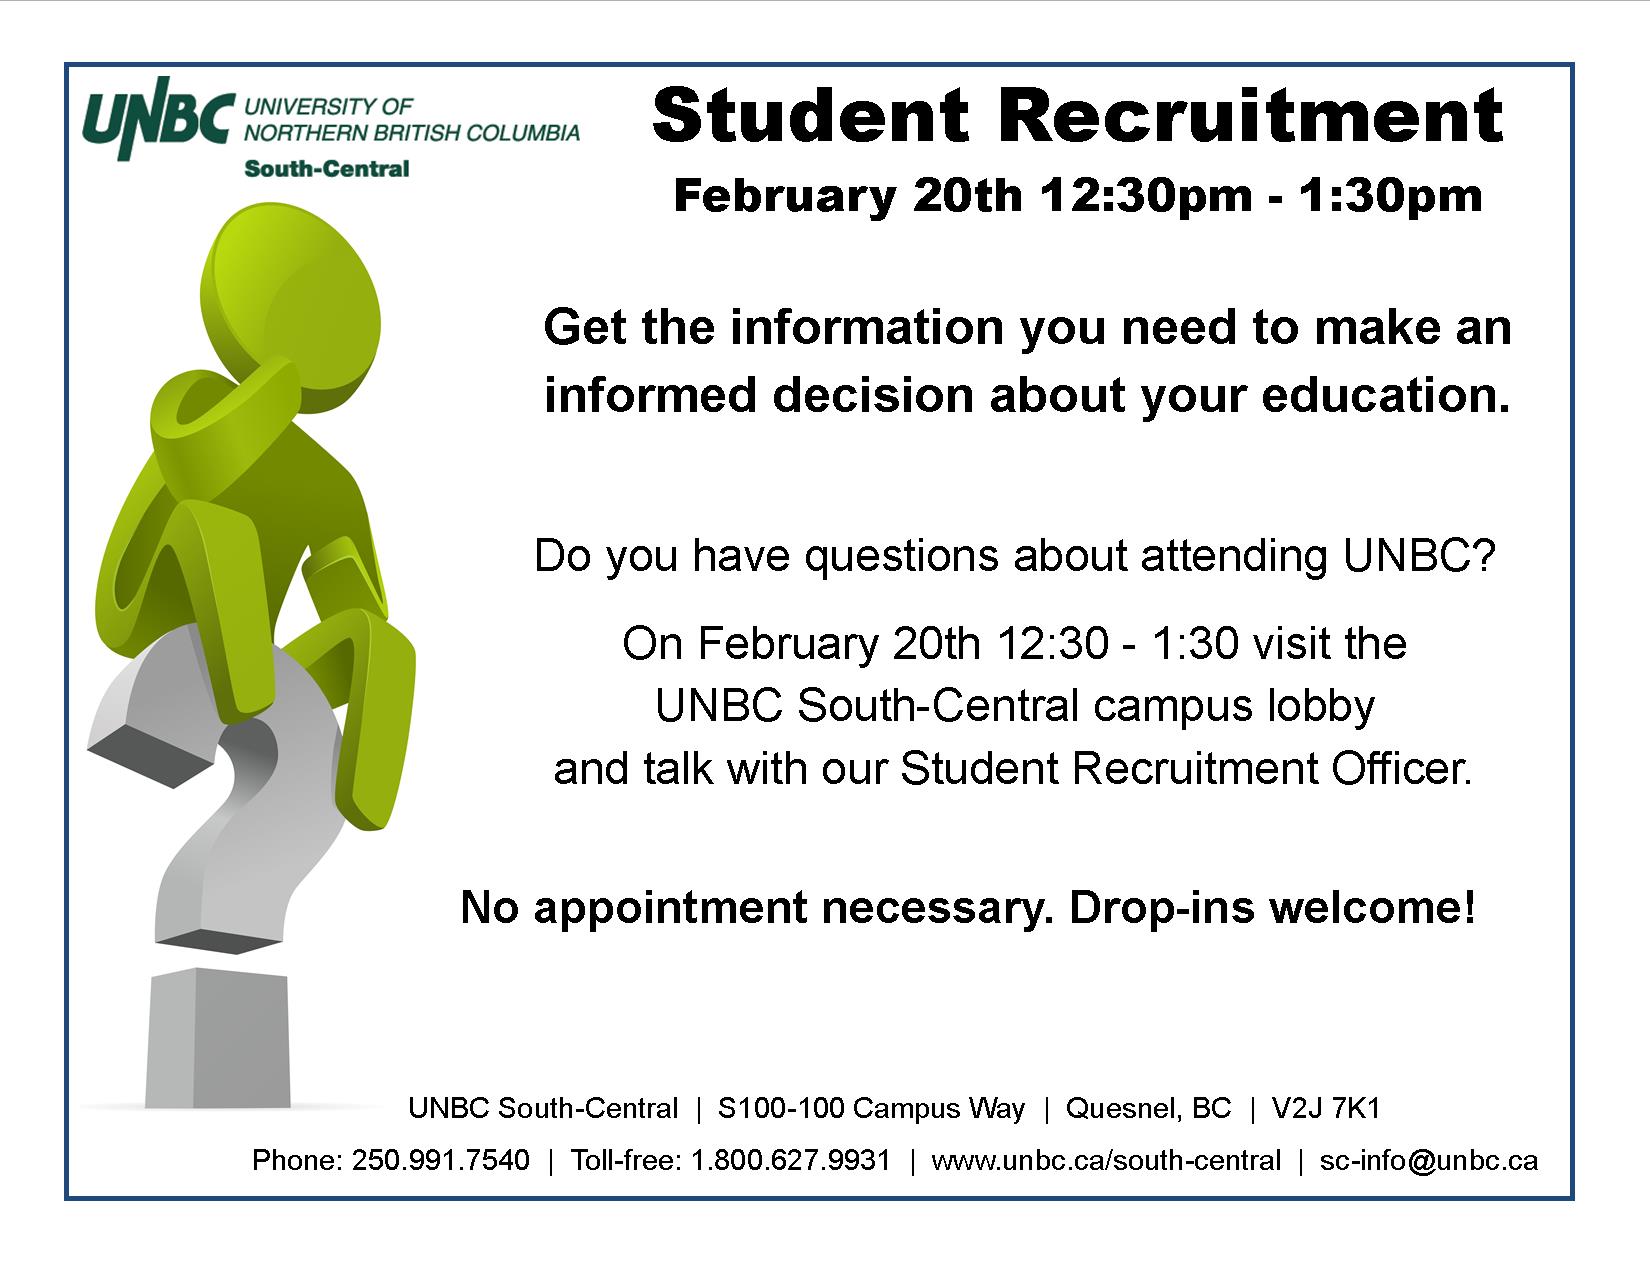 Student Recruitment visit at UNBC South-Central